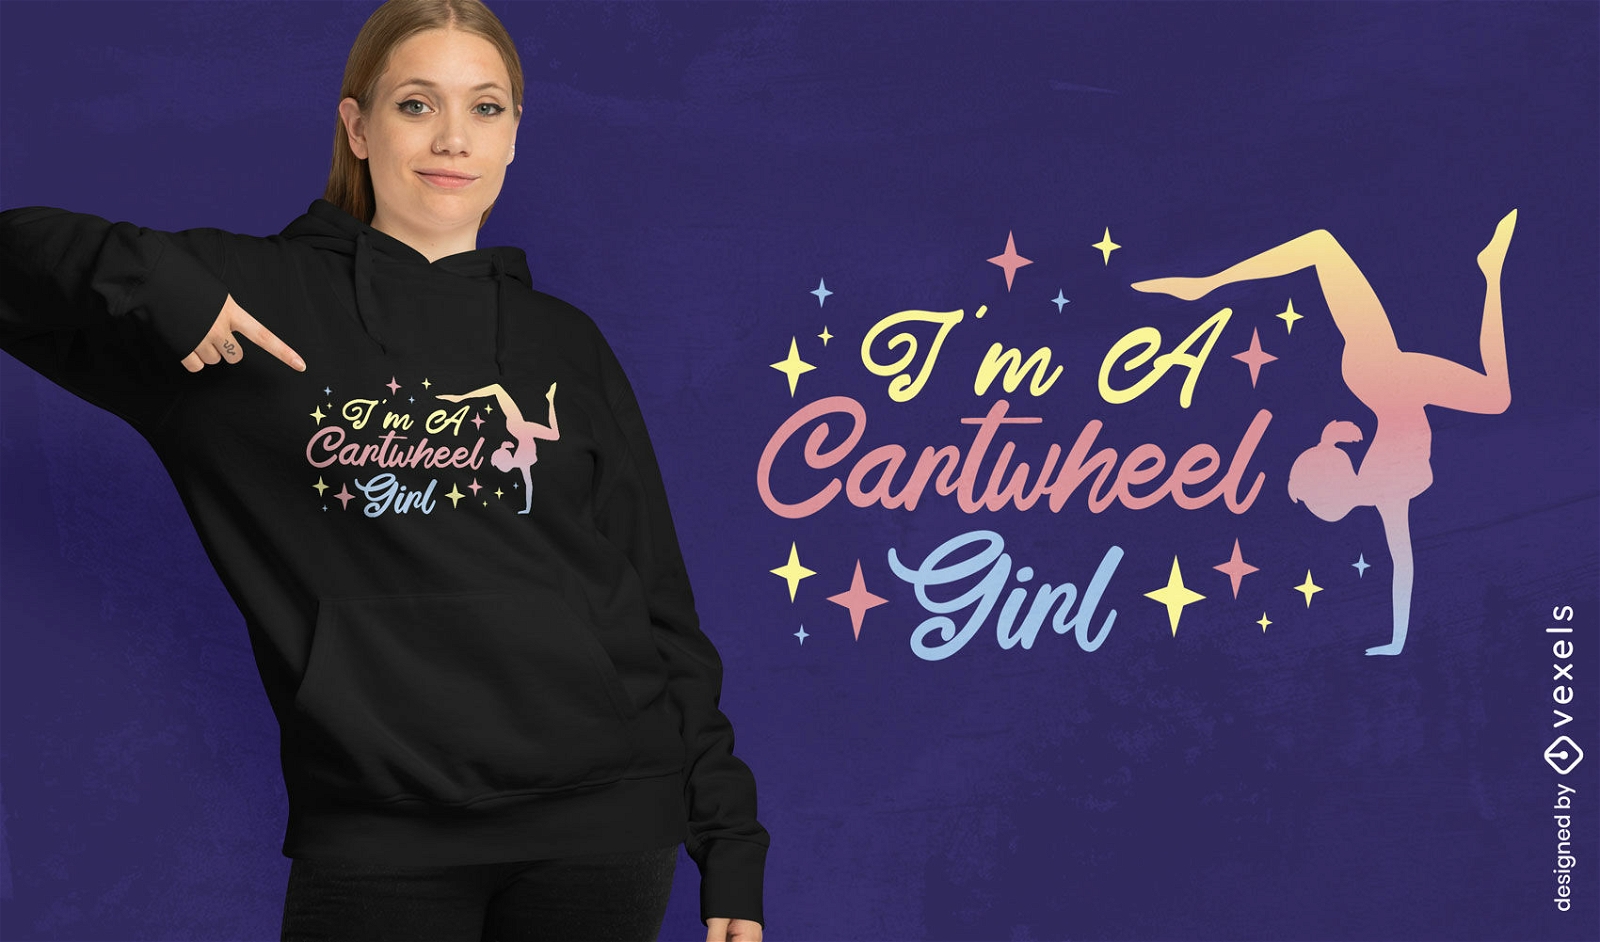 Cartwheel girl t-shirt design